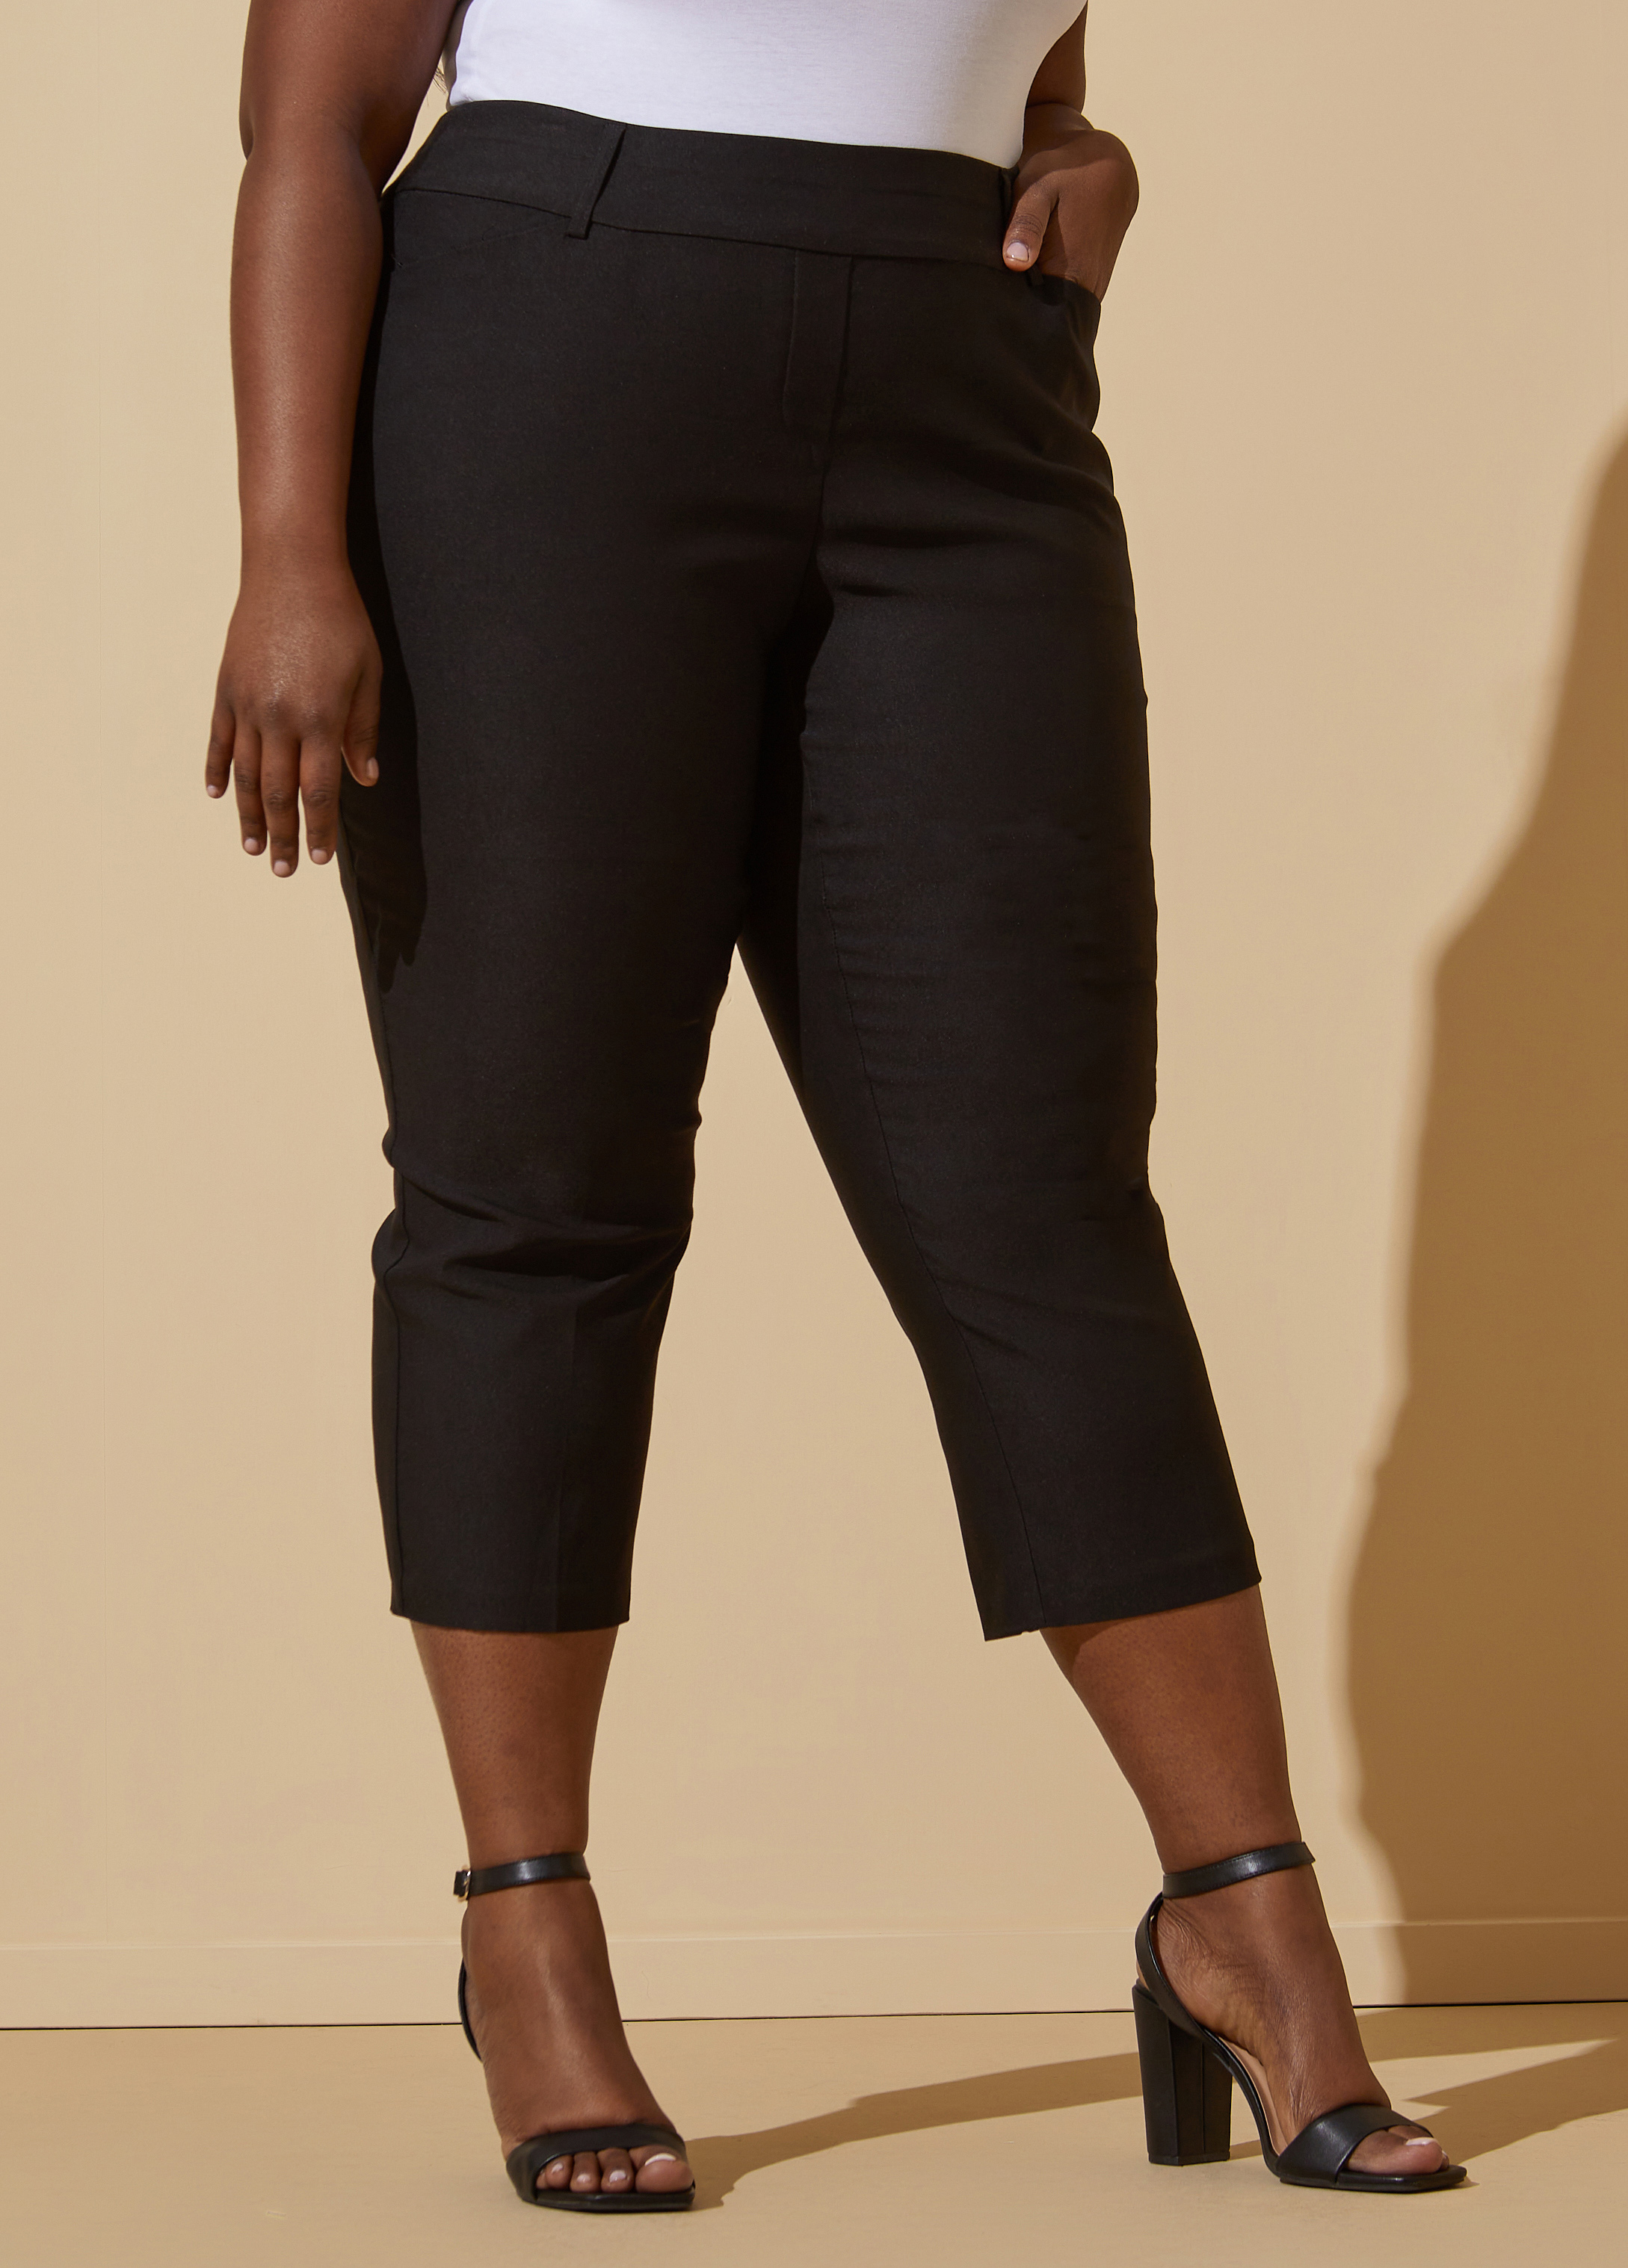 Style & Co black capri pants size 10 . In good used - Depop